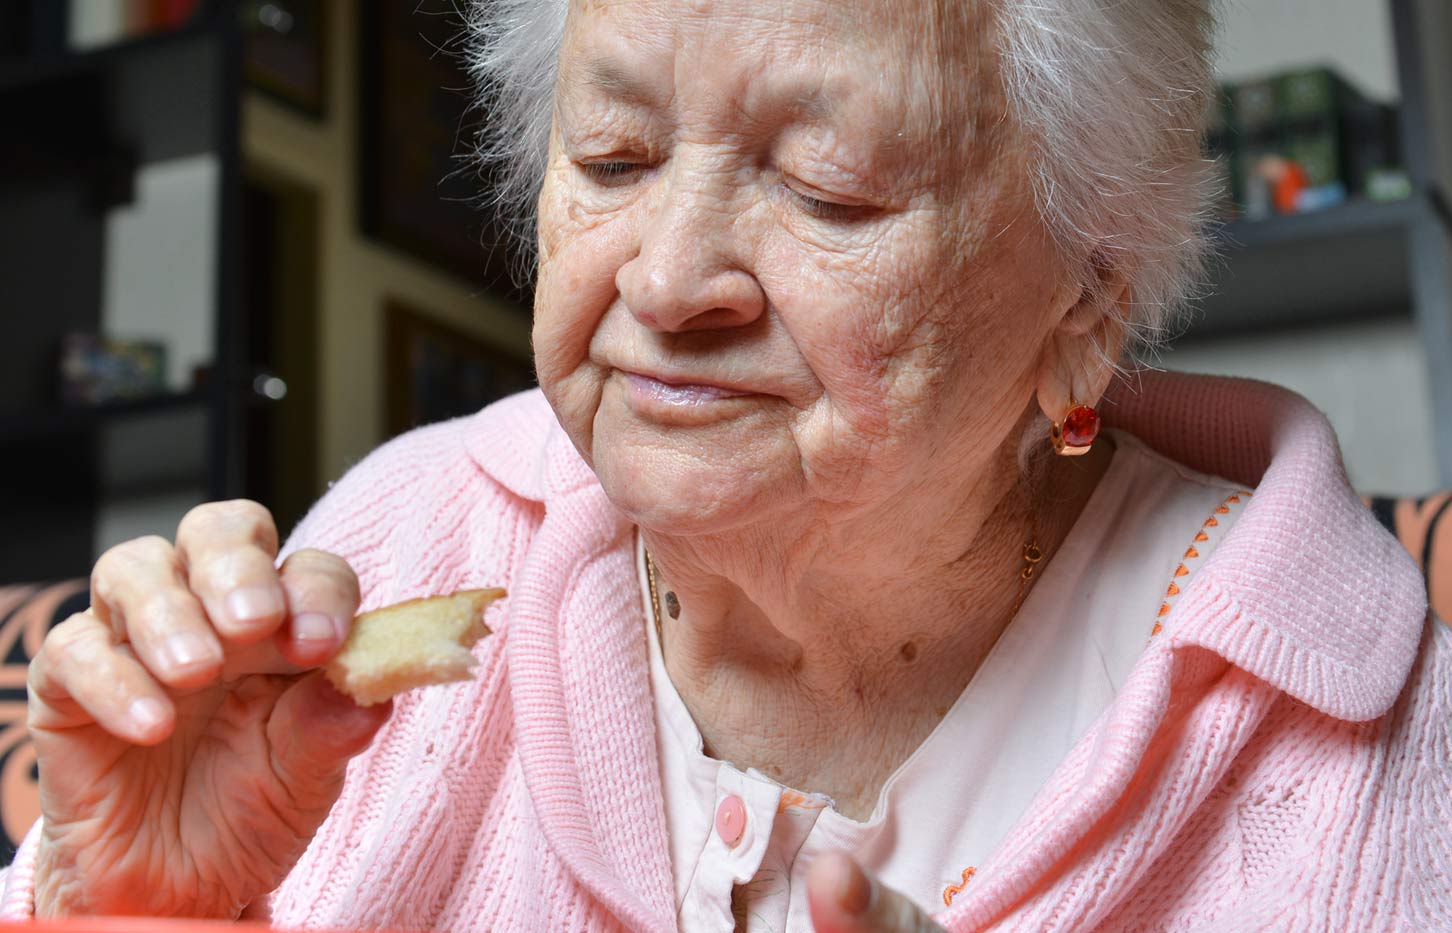 Senior Food Assistance Programs for Seniors and the Elderly